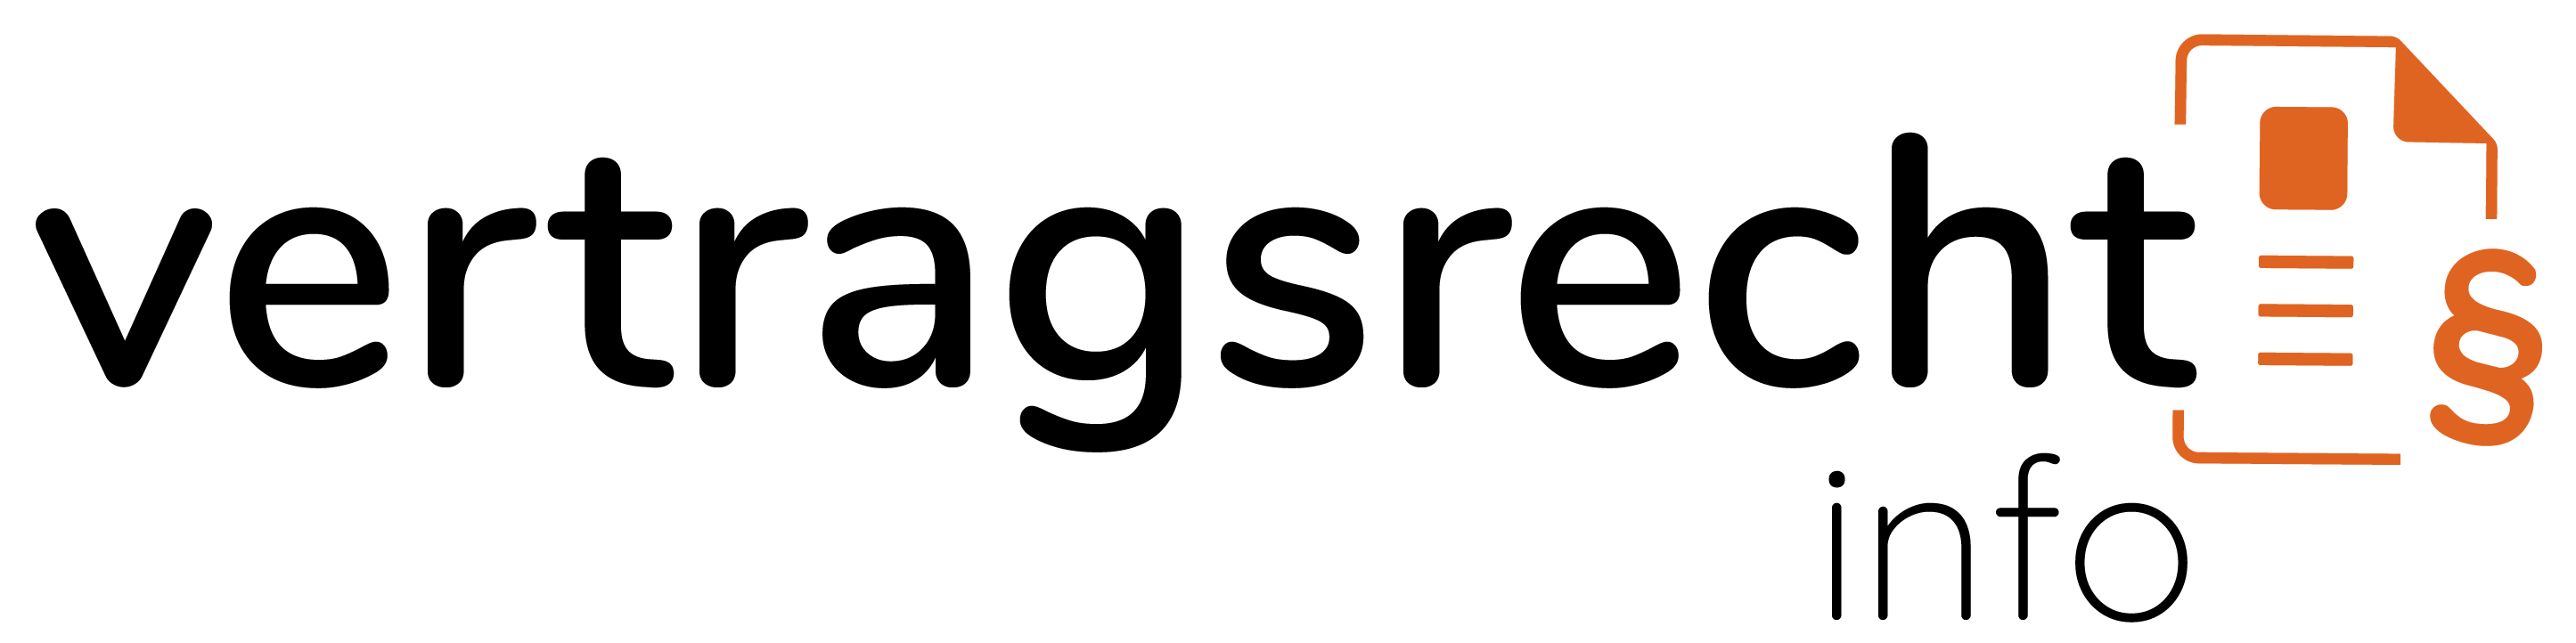 Vertragsrechtsinfo-Logo-retina